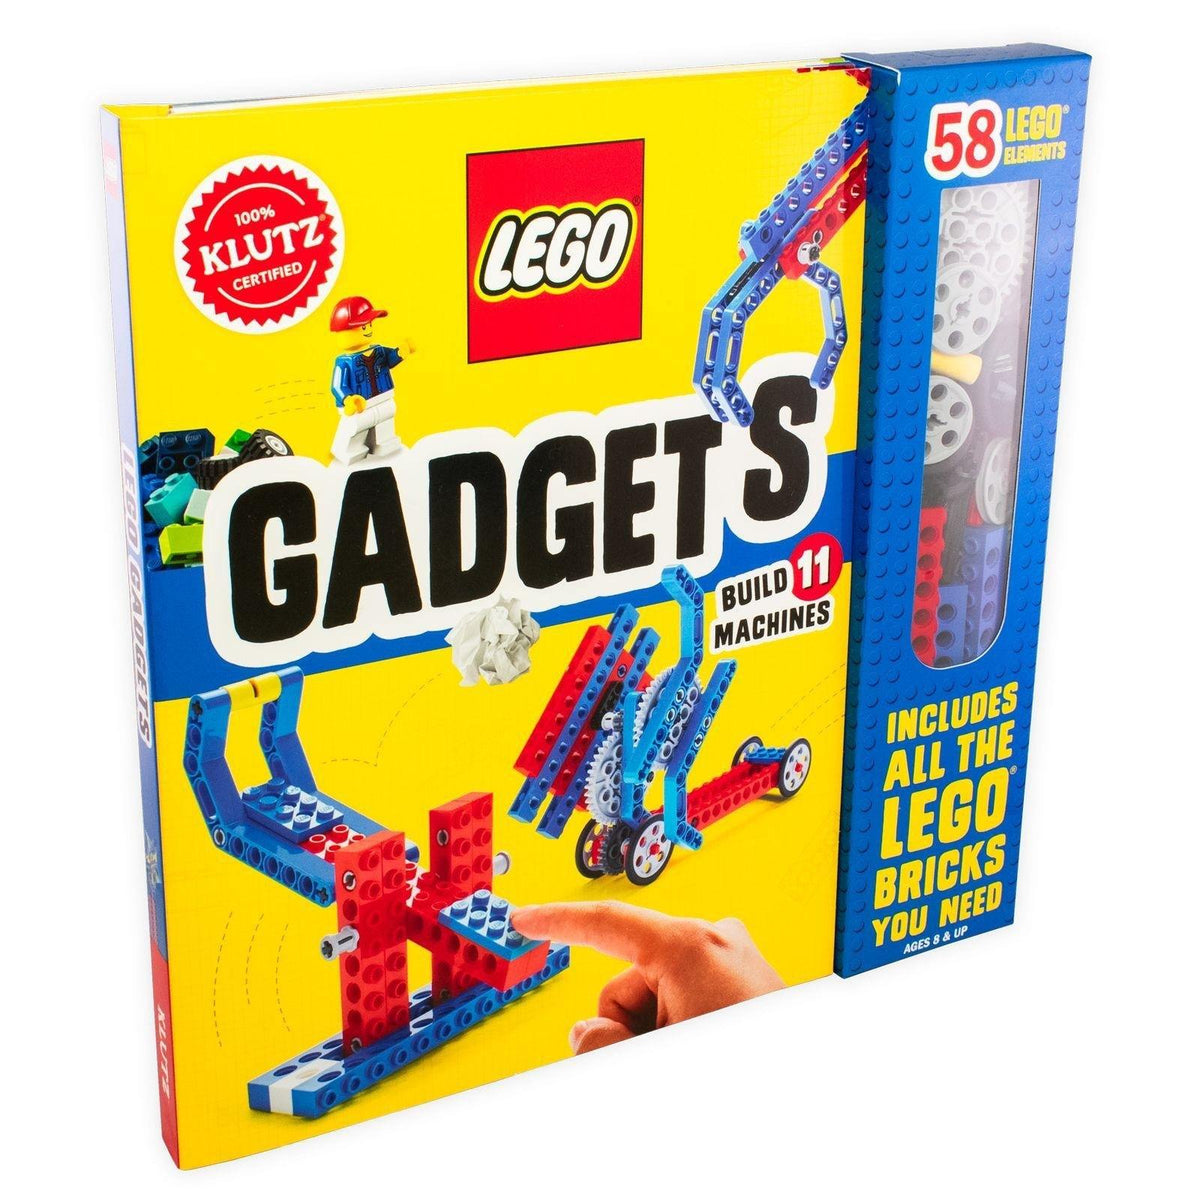 LEGO Gadgets (Klutz) Activity Book (Build 11 Machines) - Ages 8+ - Paperback